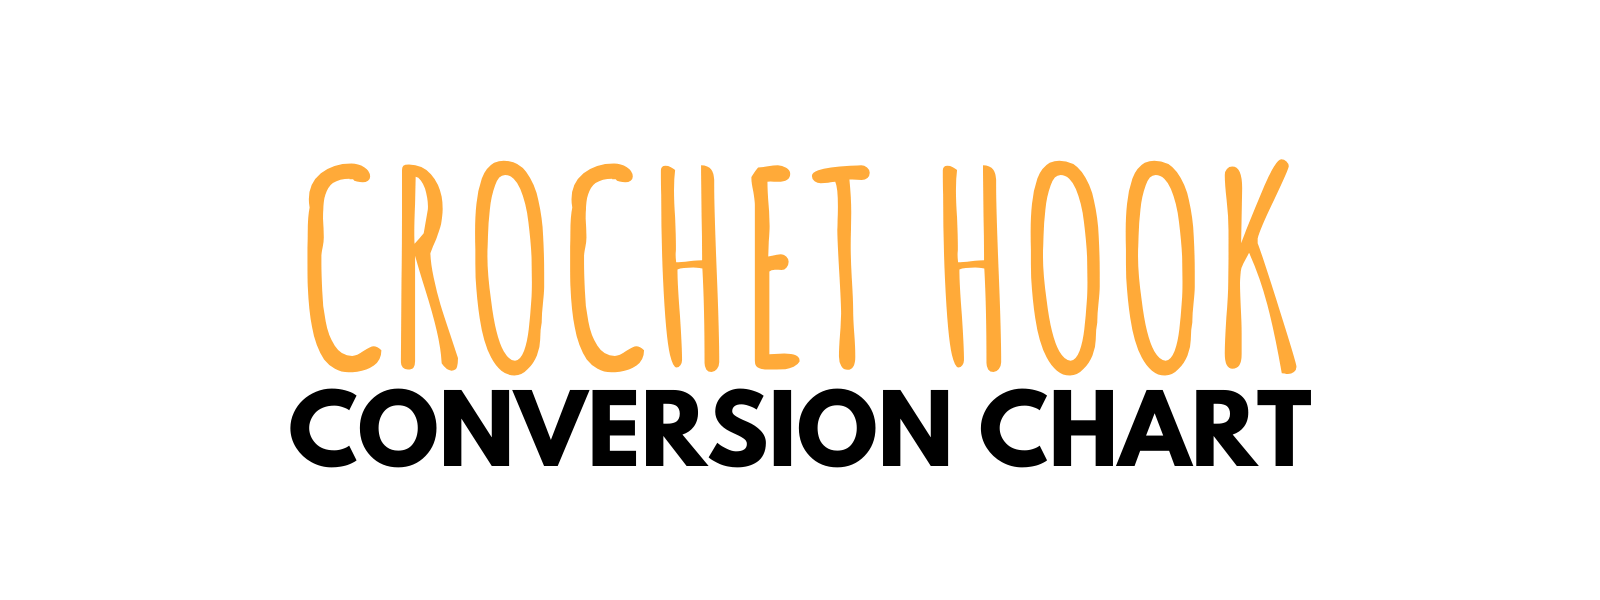 Crochet Hook Conversion Chart – Printable pdf